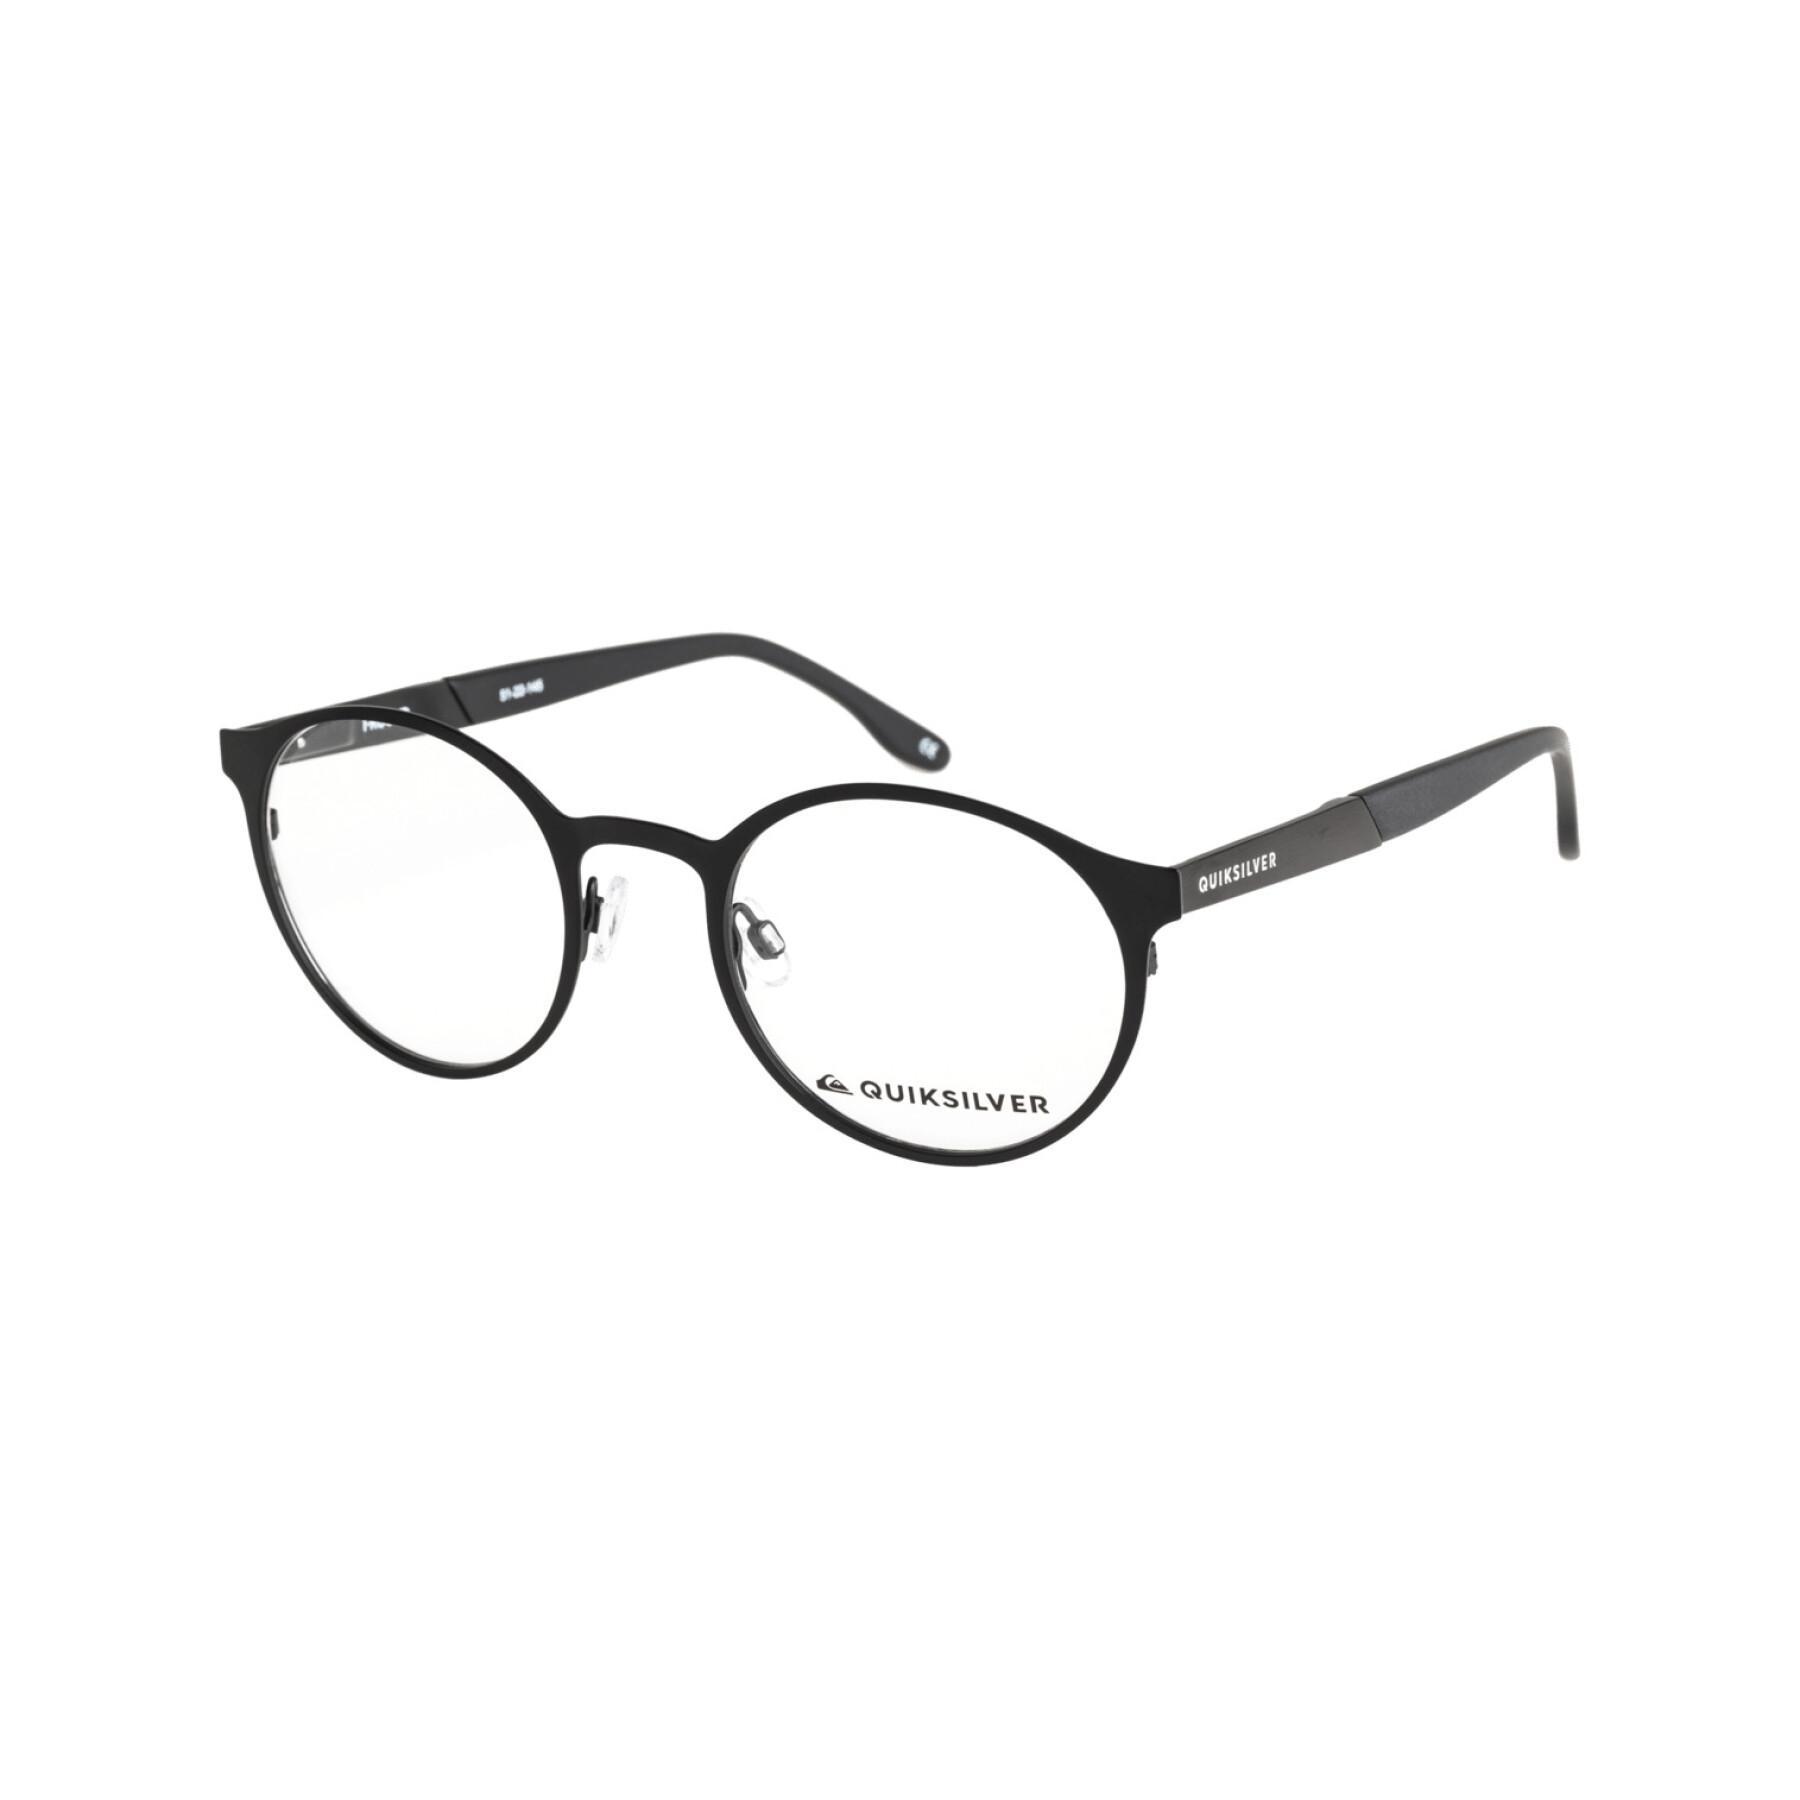 Eyeglasses Quiksilver I-Round - Fashion Accessories - Accessories